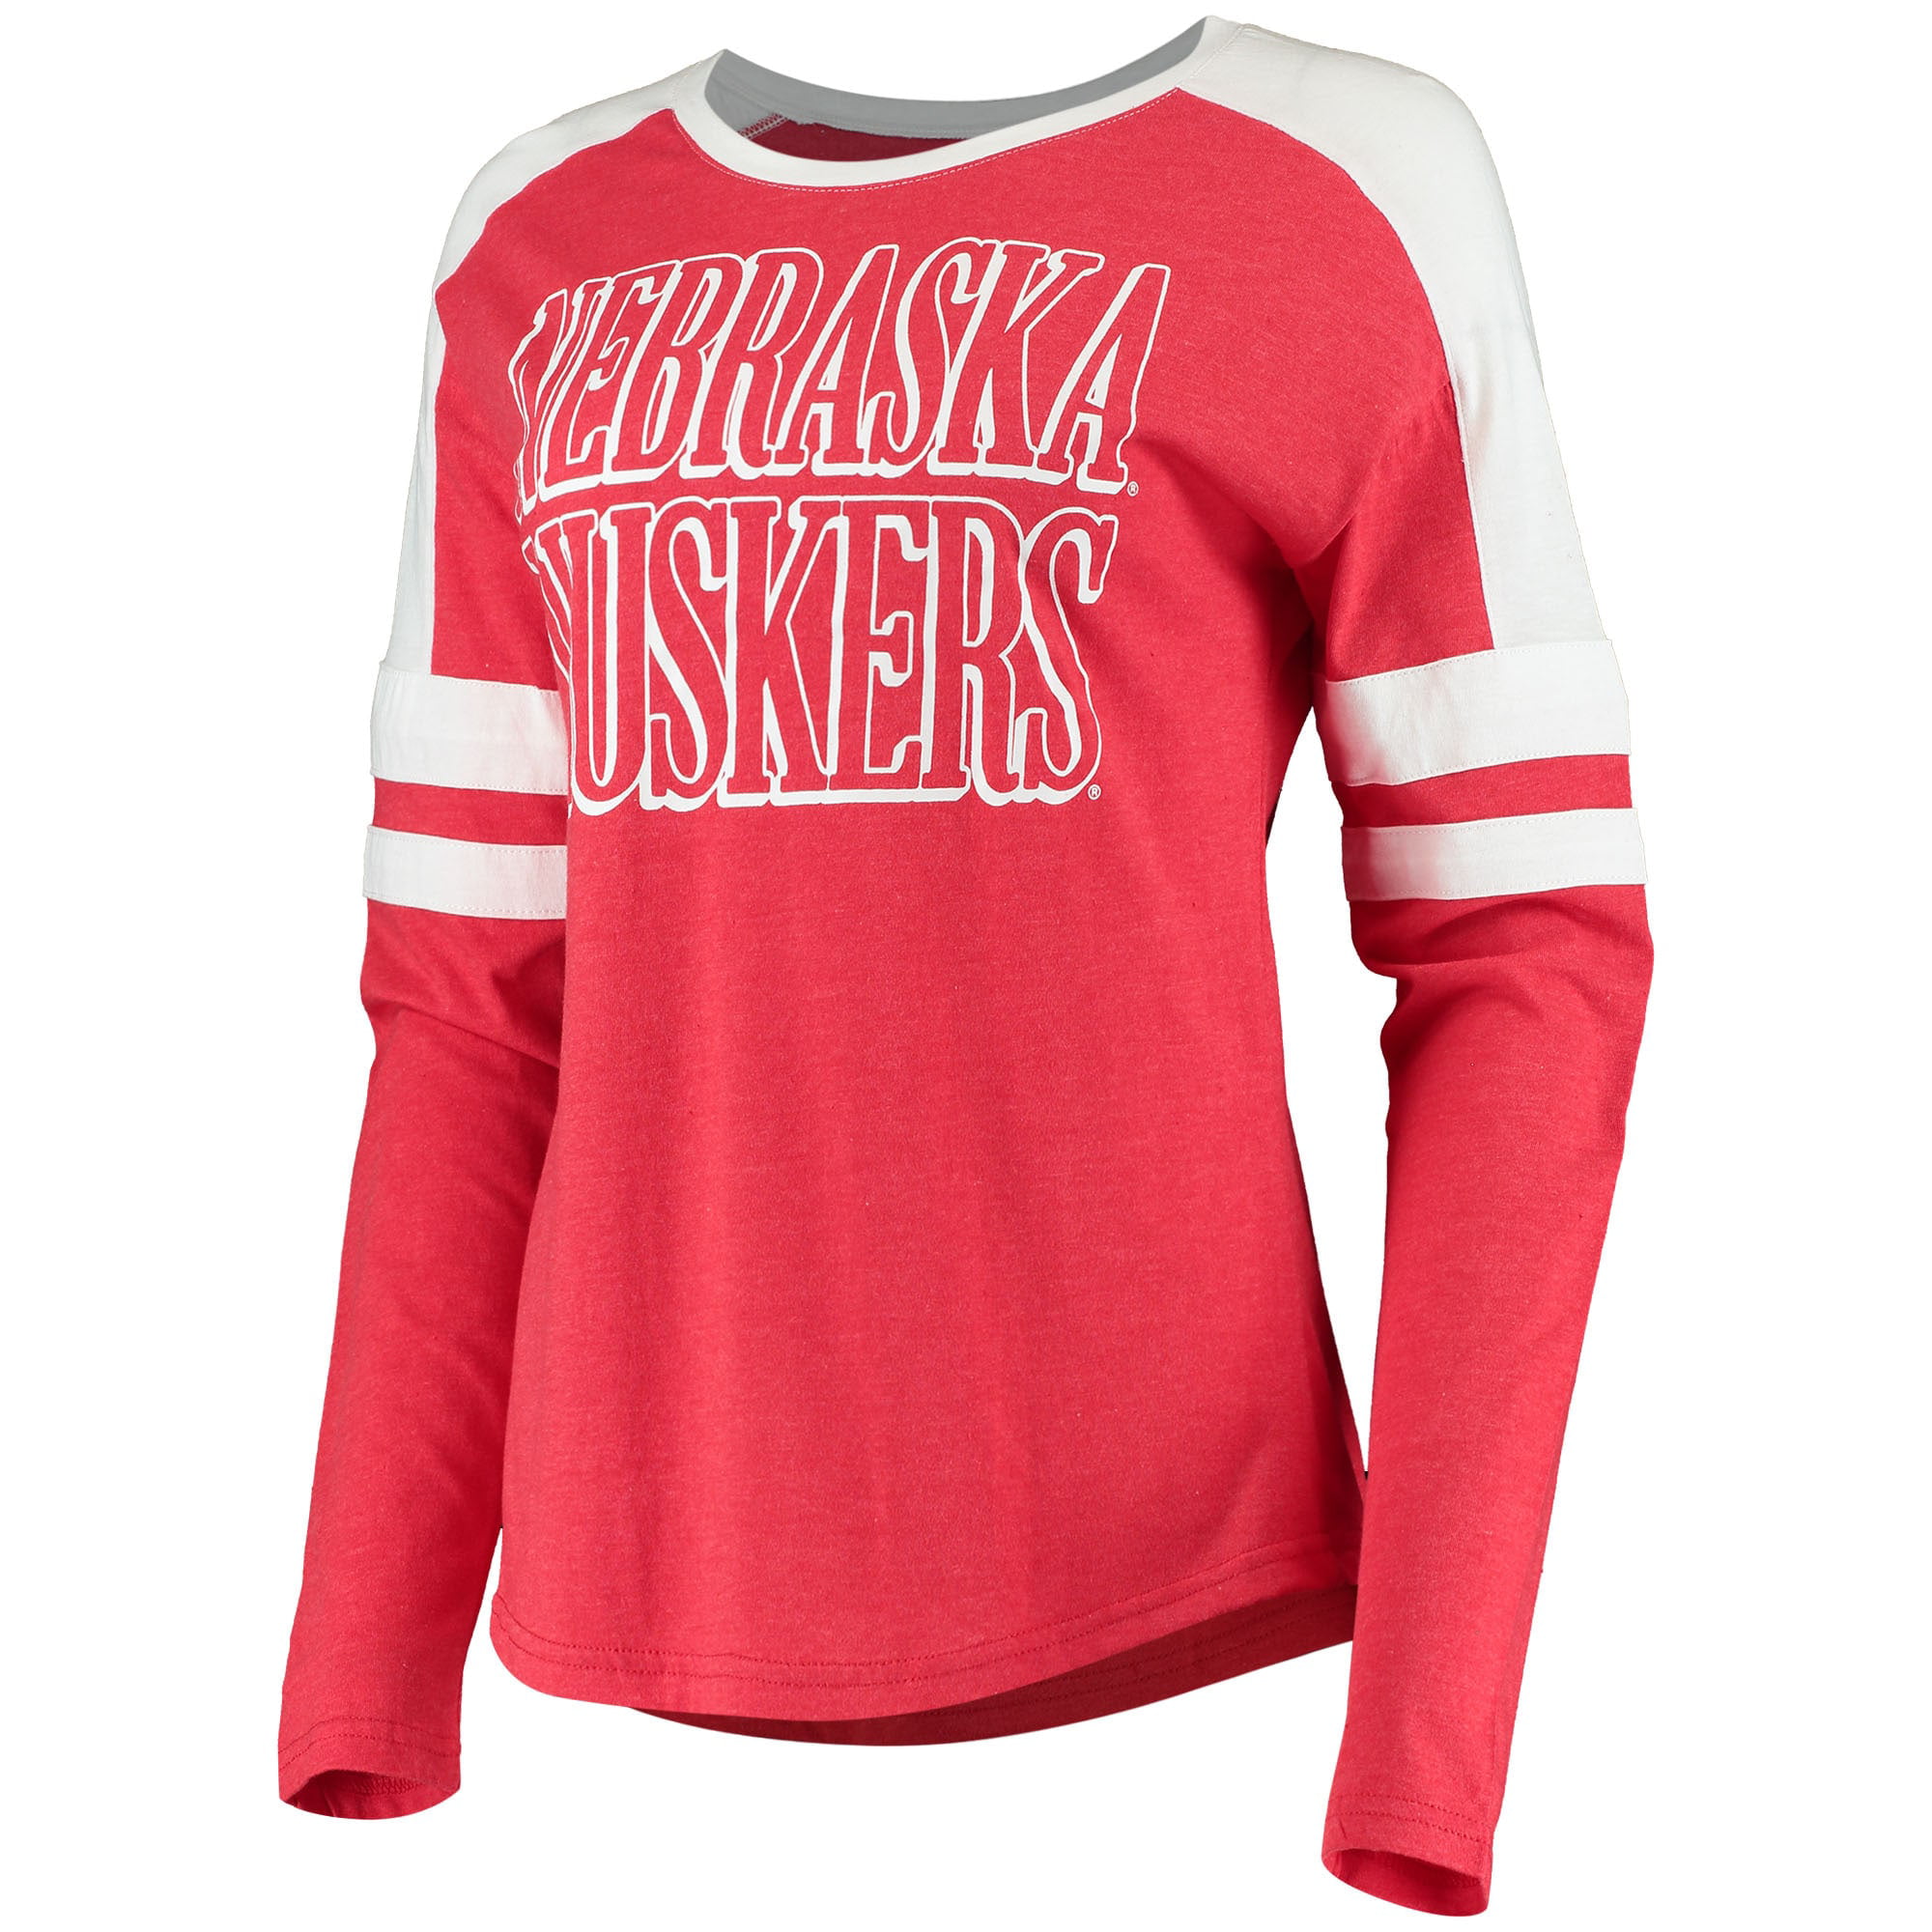 New Nebraska Cornhuskers Womens sizes XL-2XL Red Shirt by J.America 